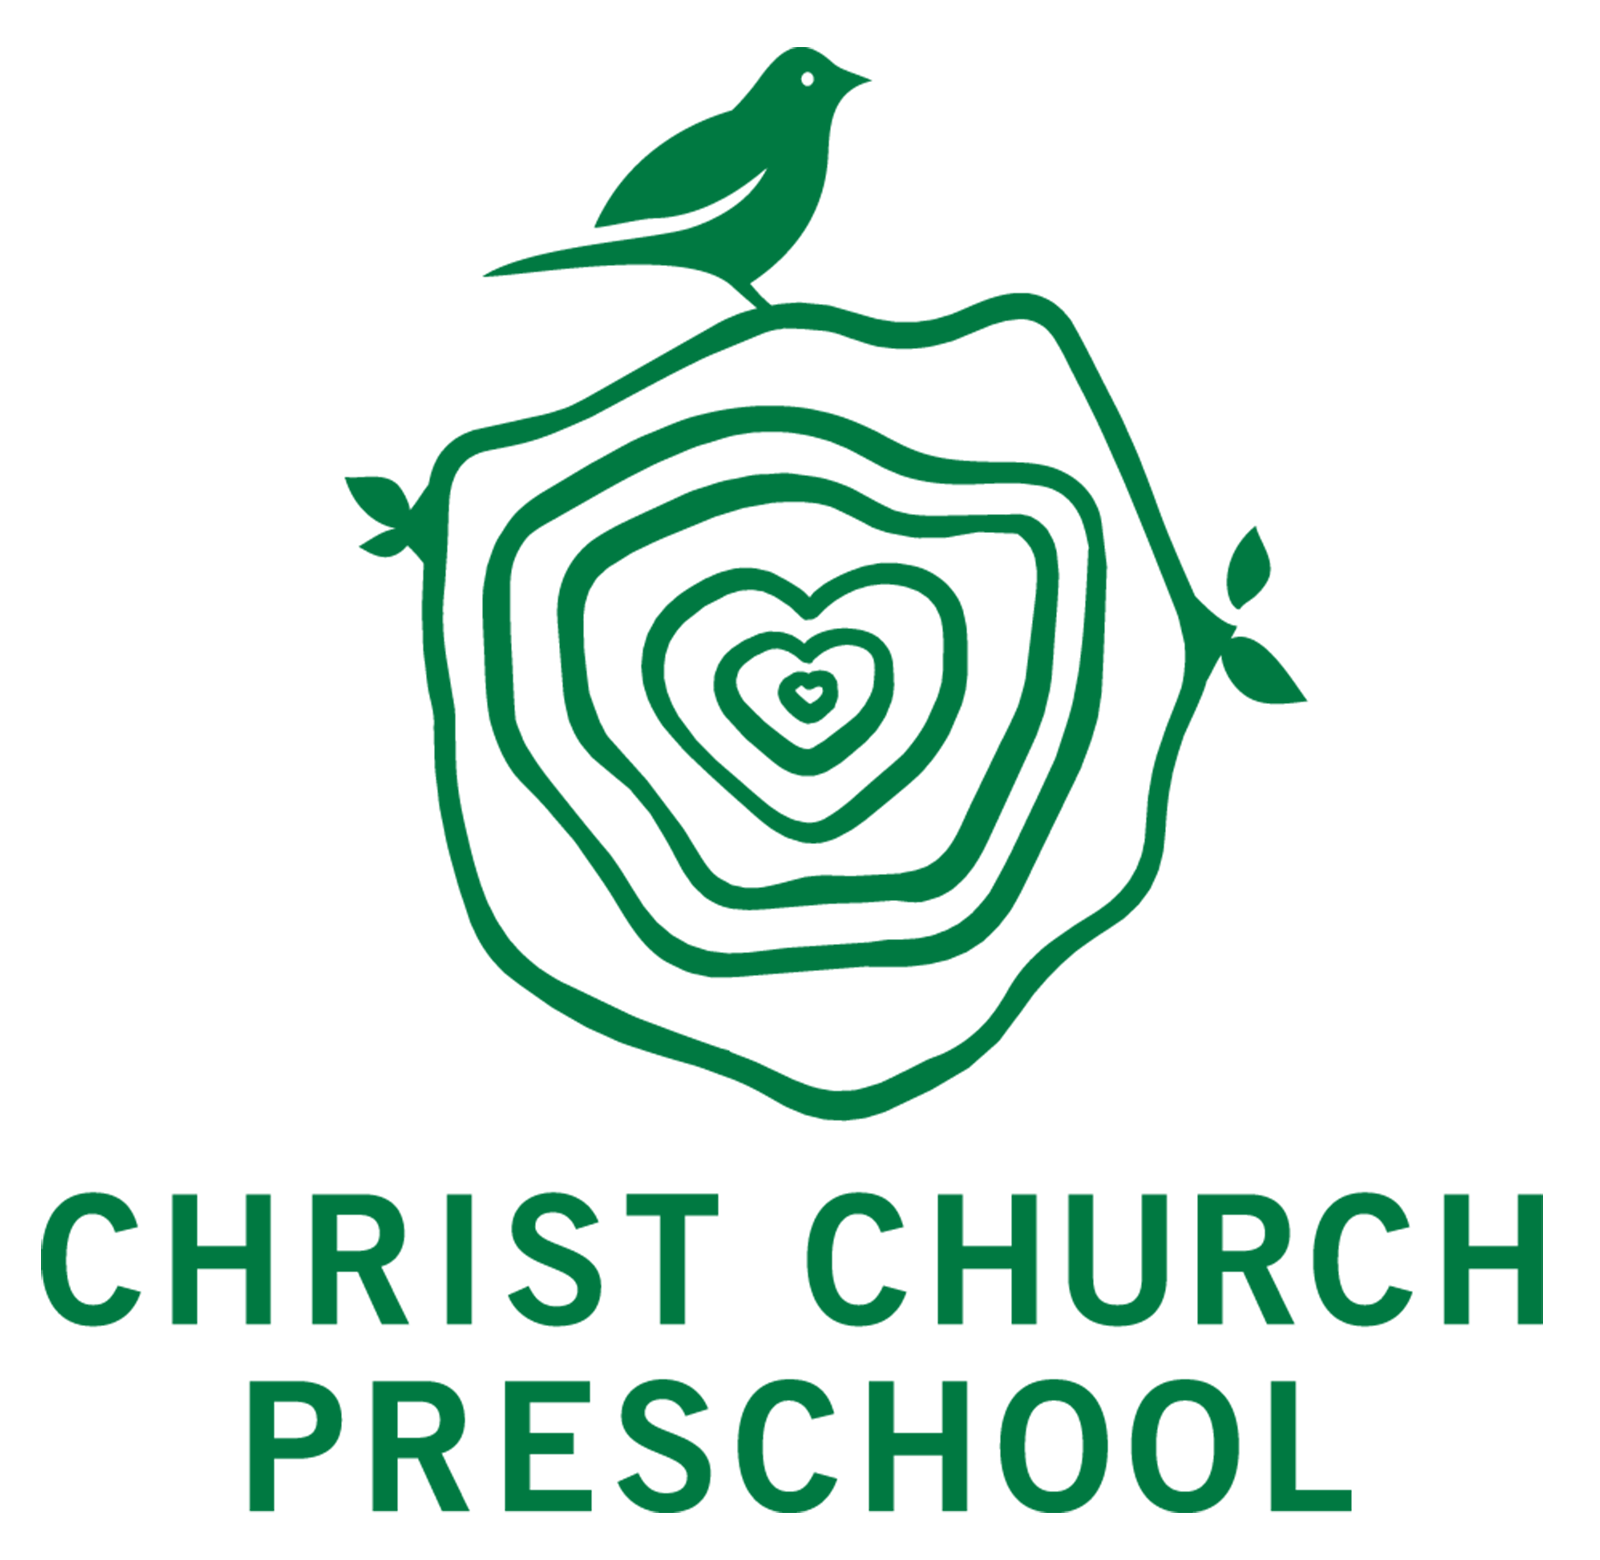 Christ Church Preschool